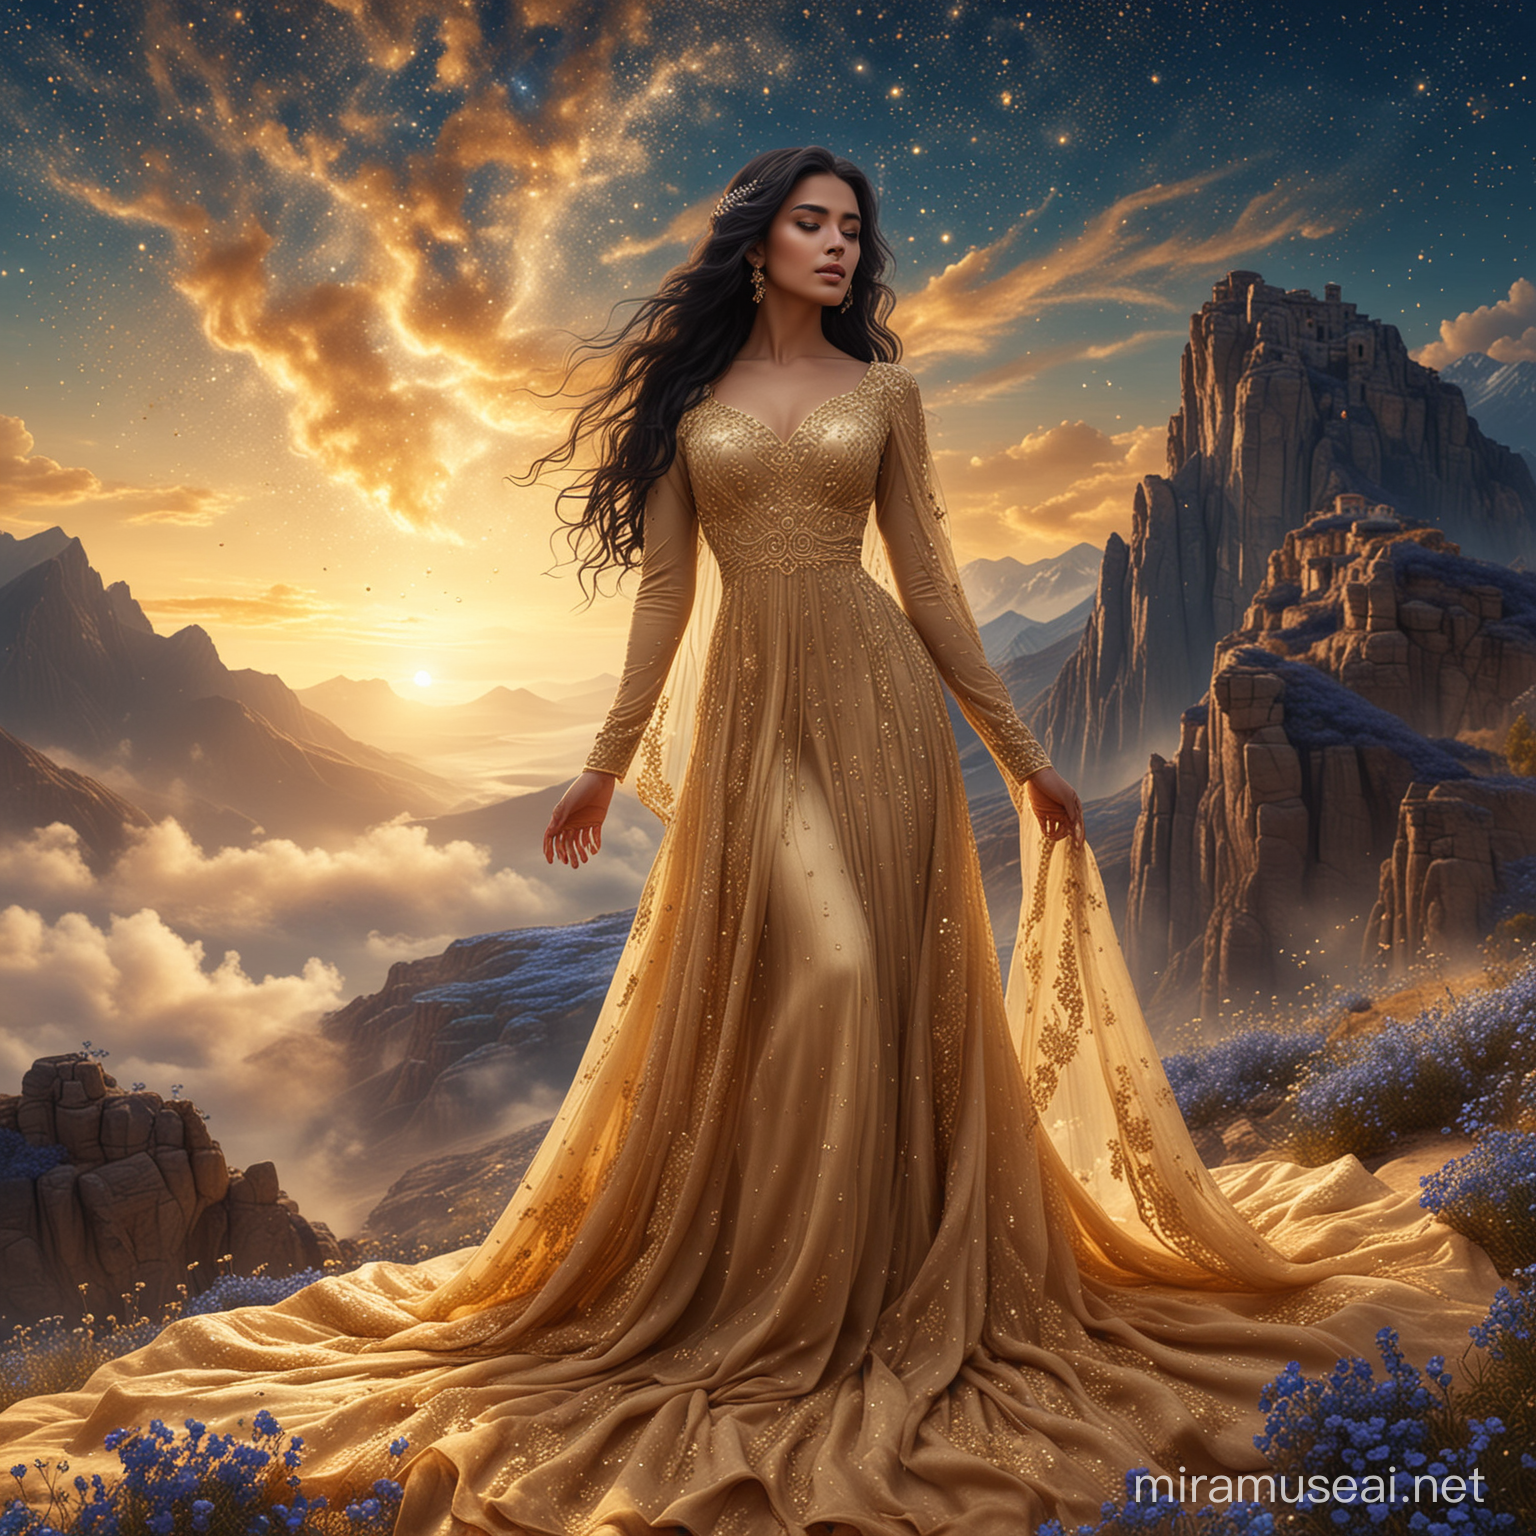 Elegant Woman in Golden Dust Fantasy Landscape